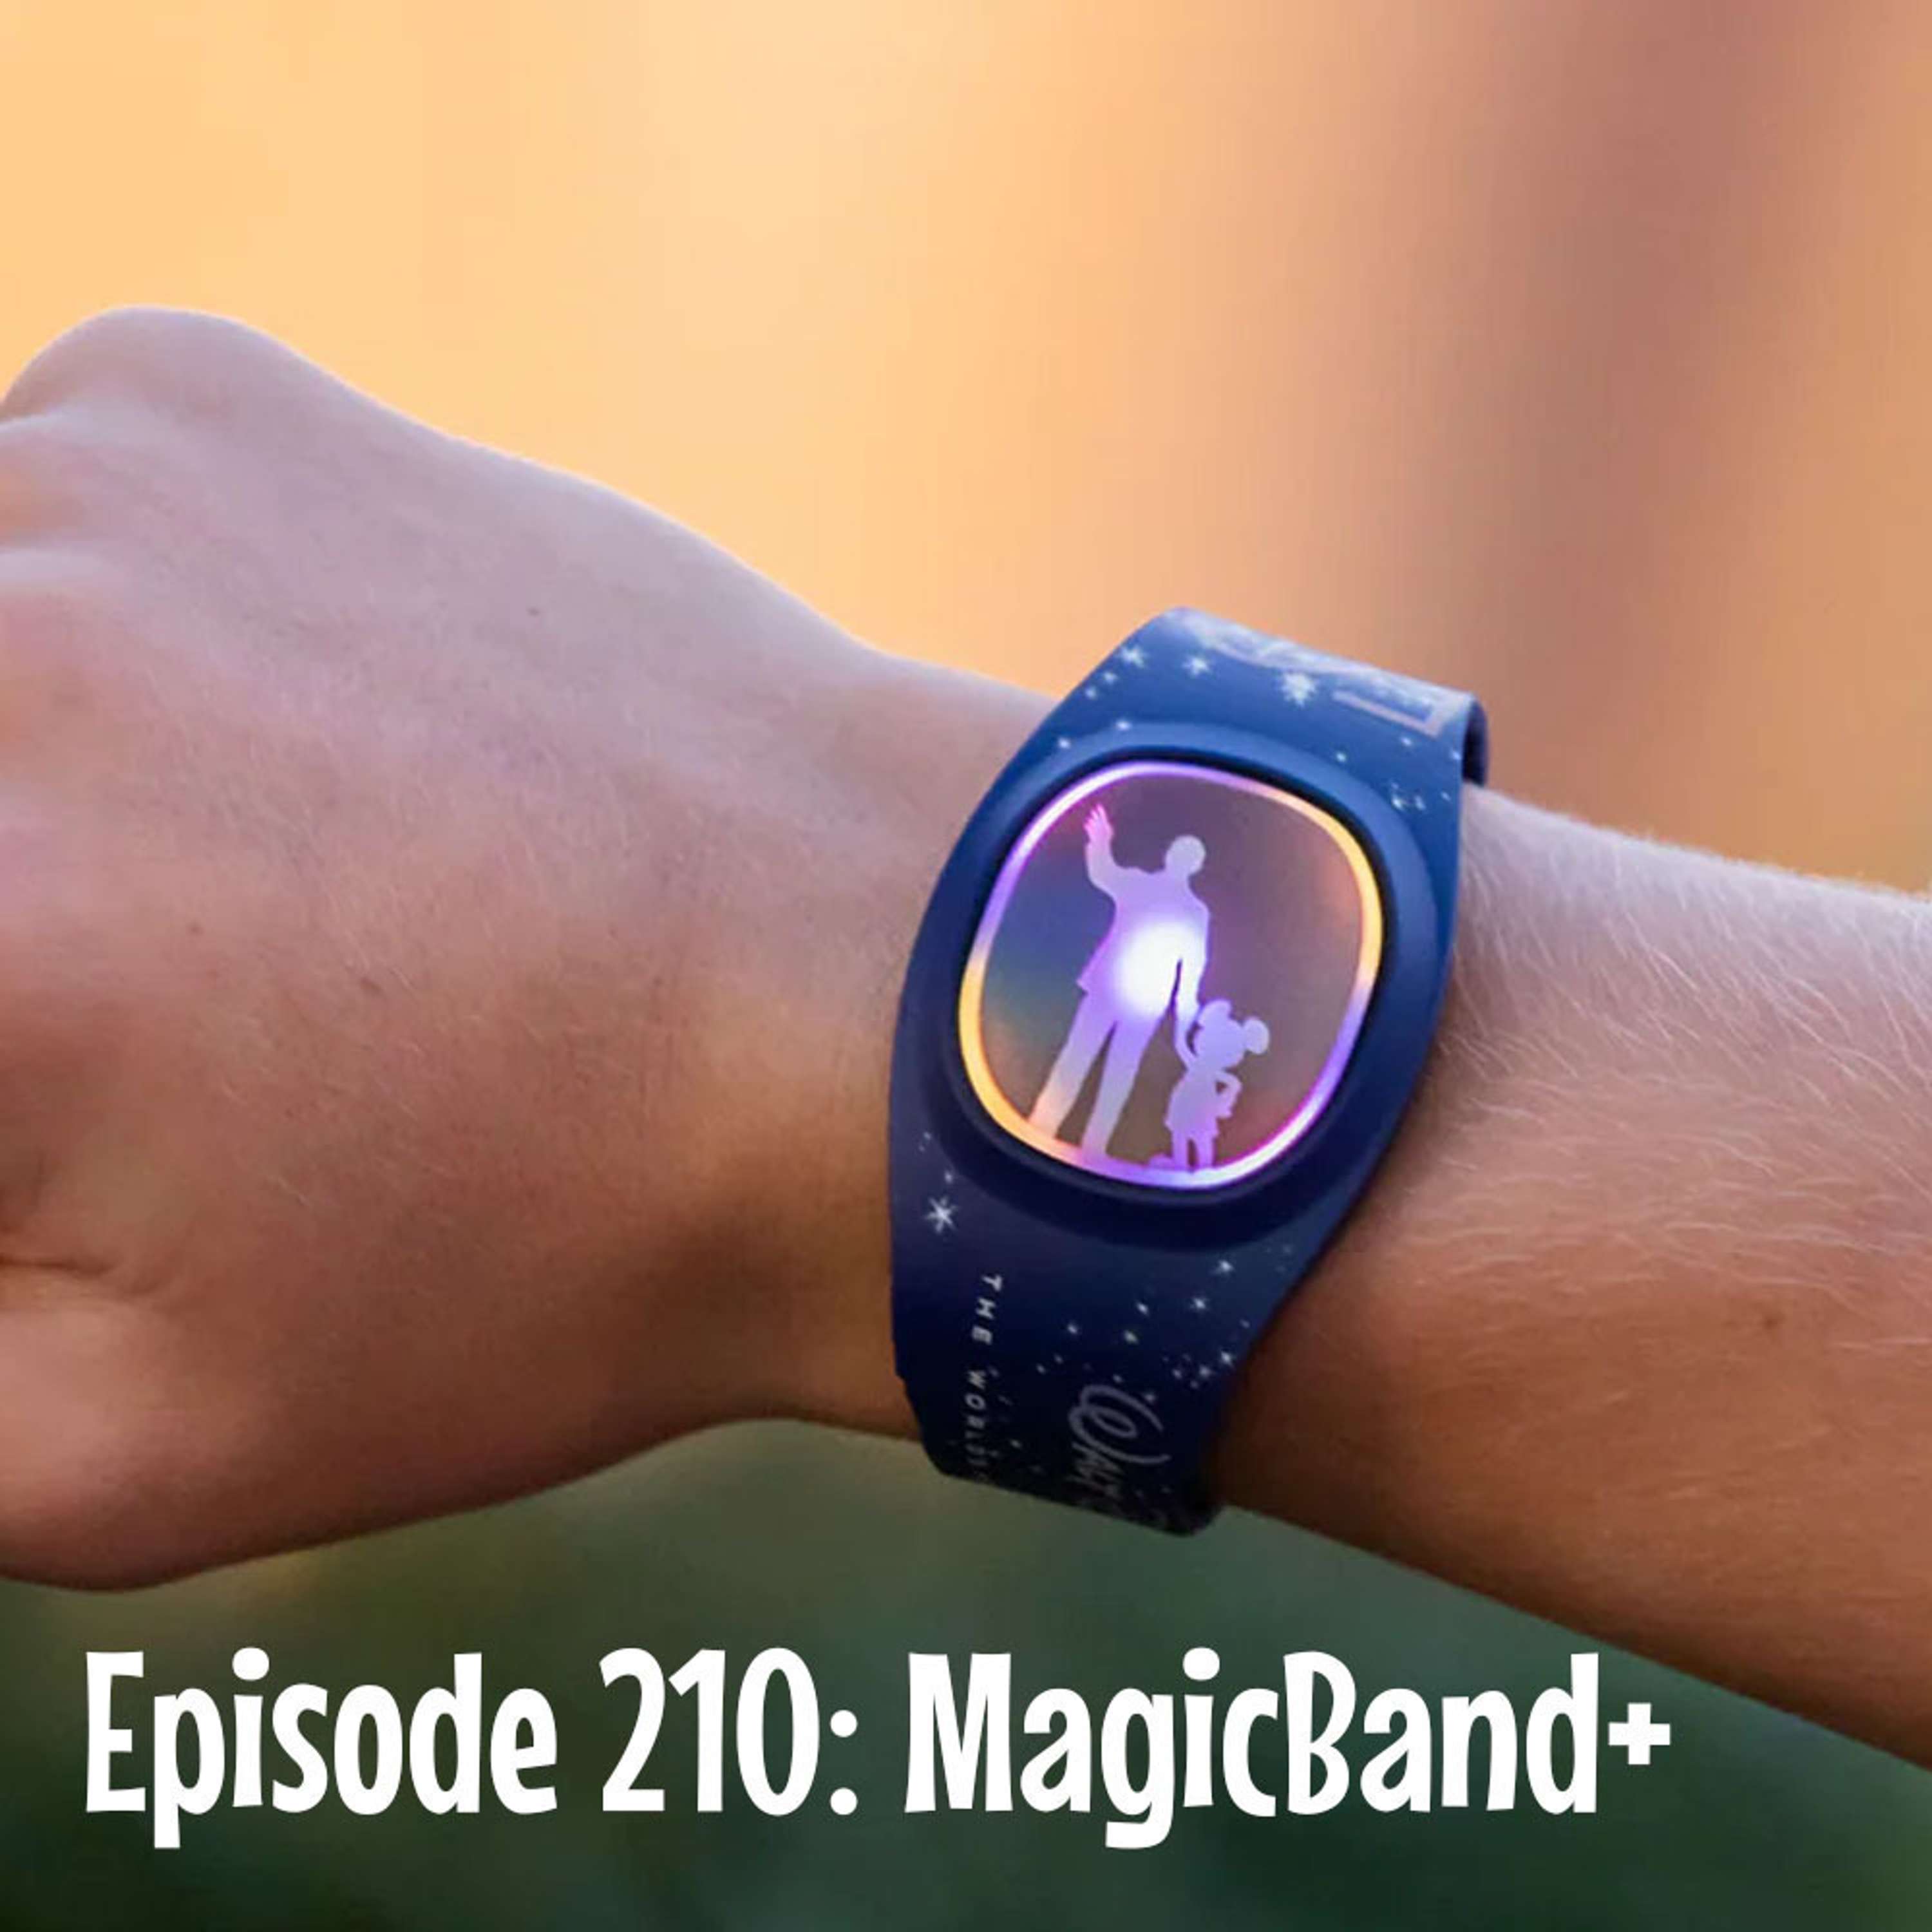 Episode 210: MagicBand+